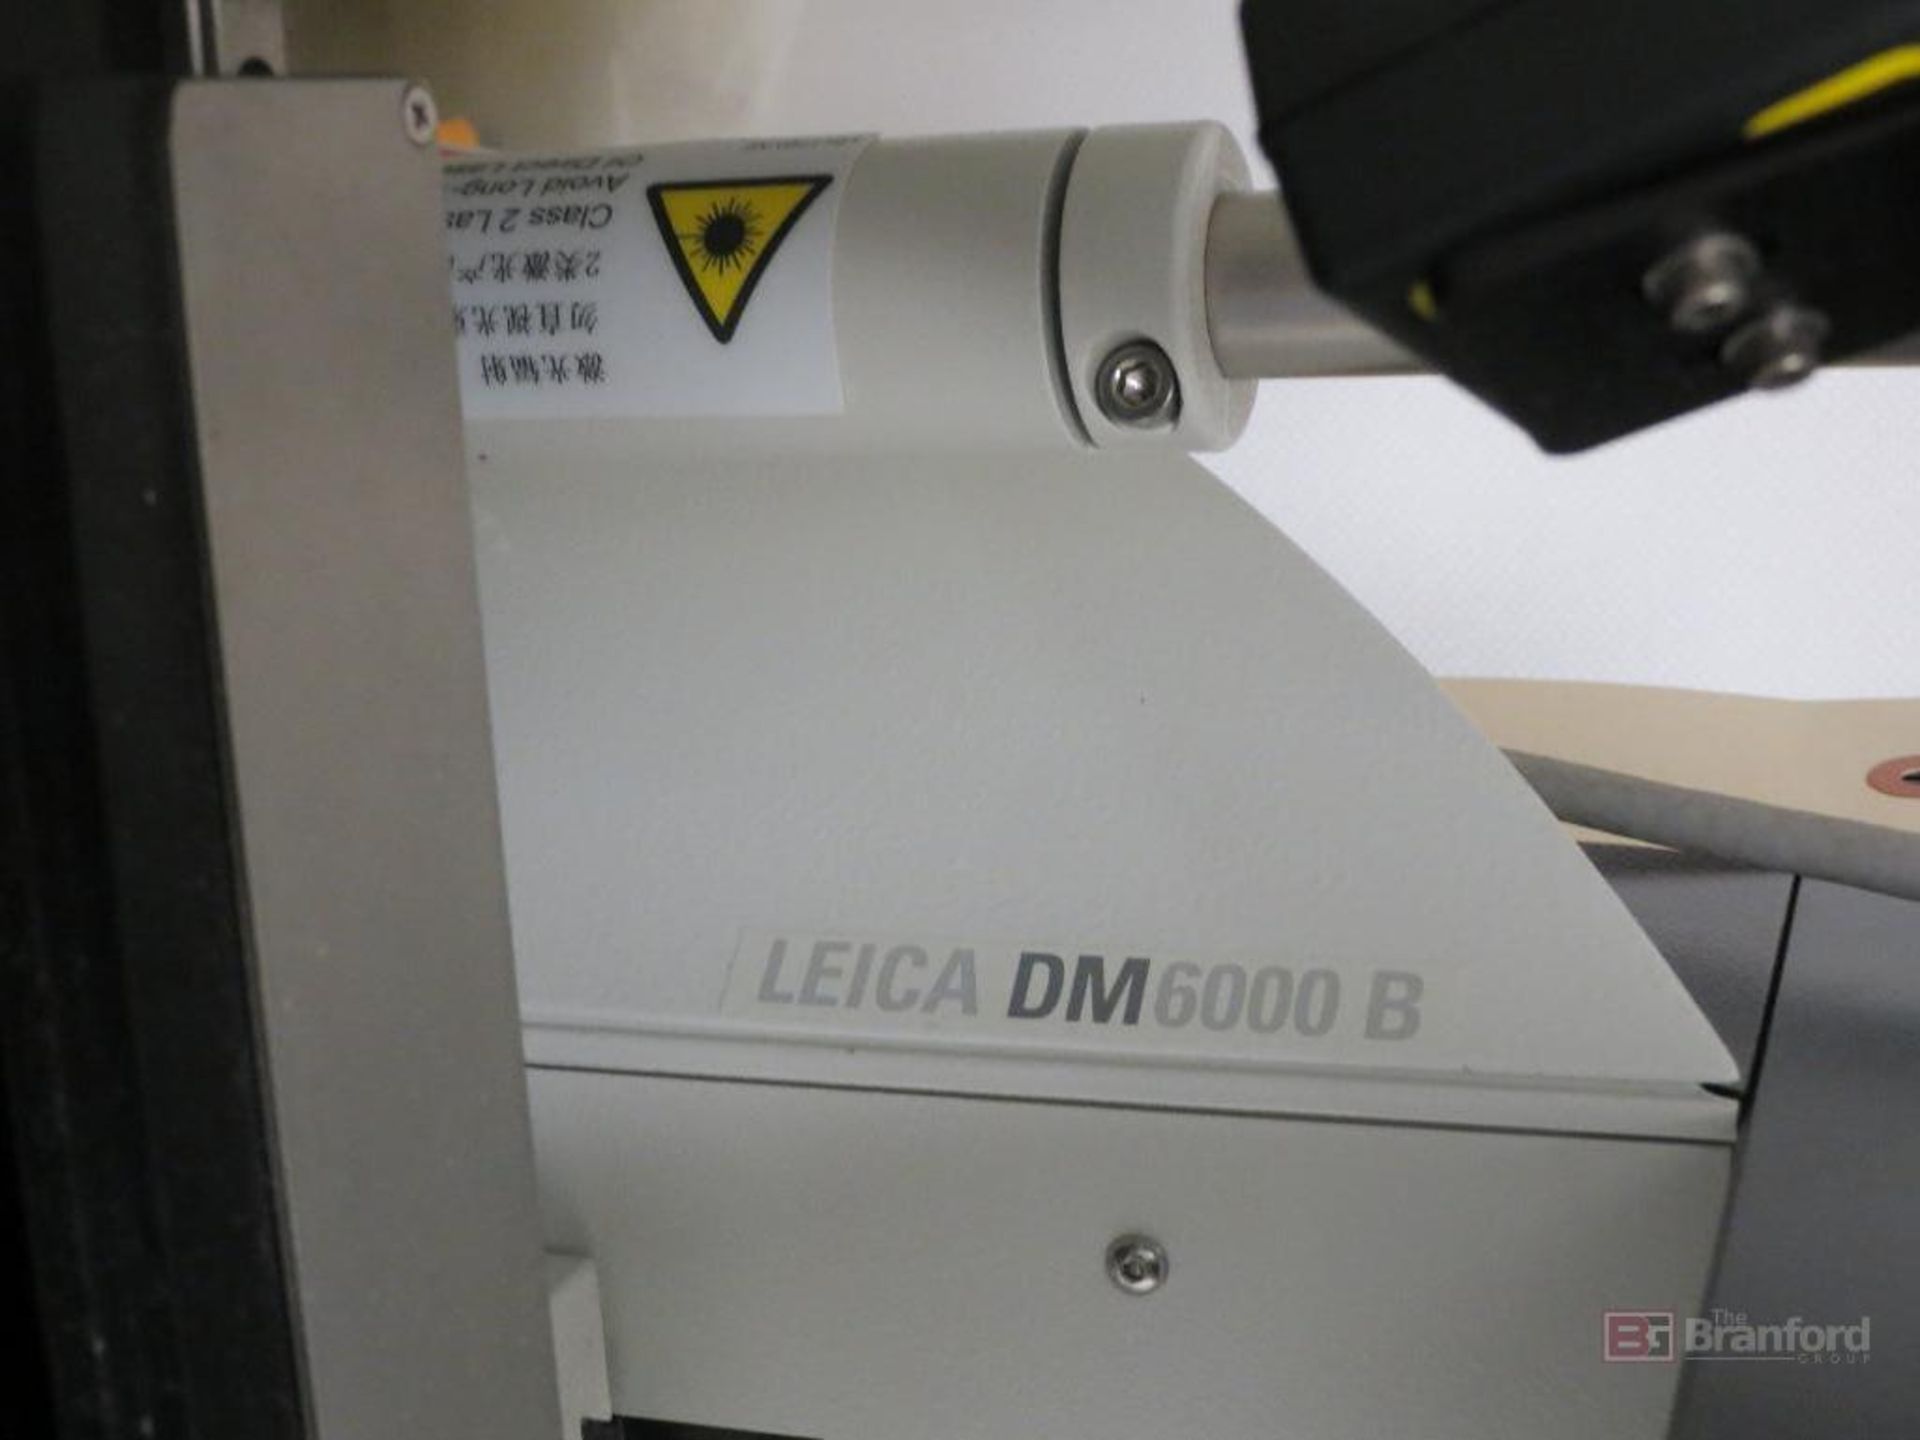 Leica DM6000B Microscope, (2019) - Image 17 of 19